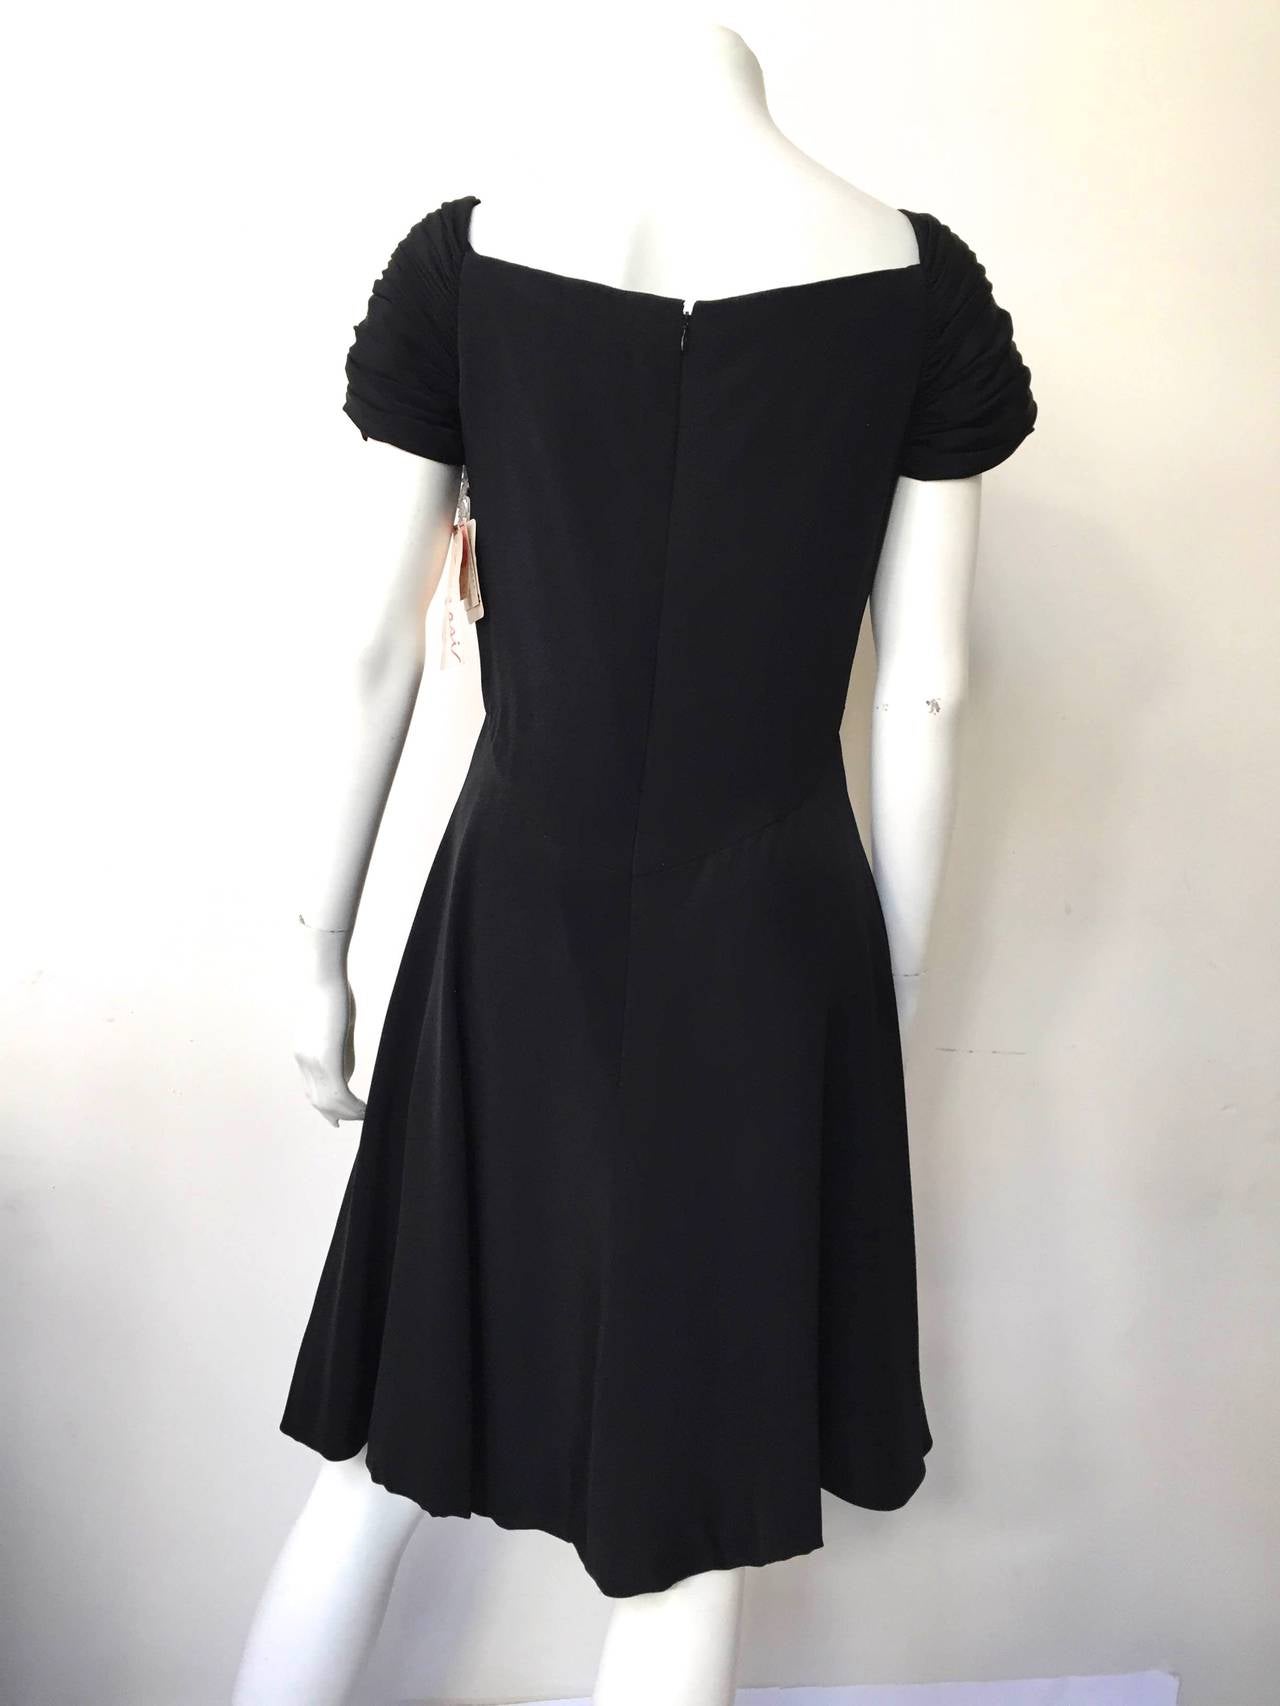 Scaasi 80s black silk dress never worn size 6. 2